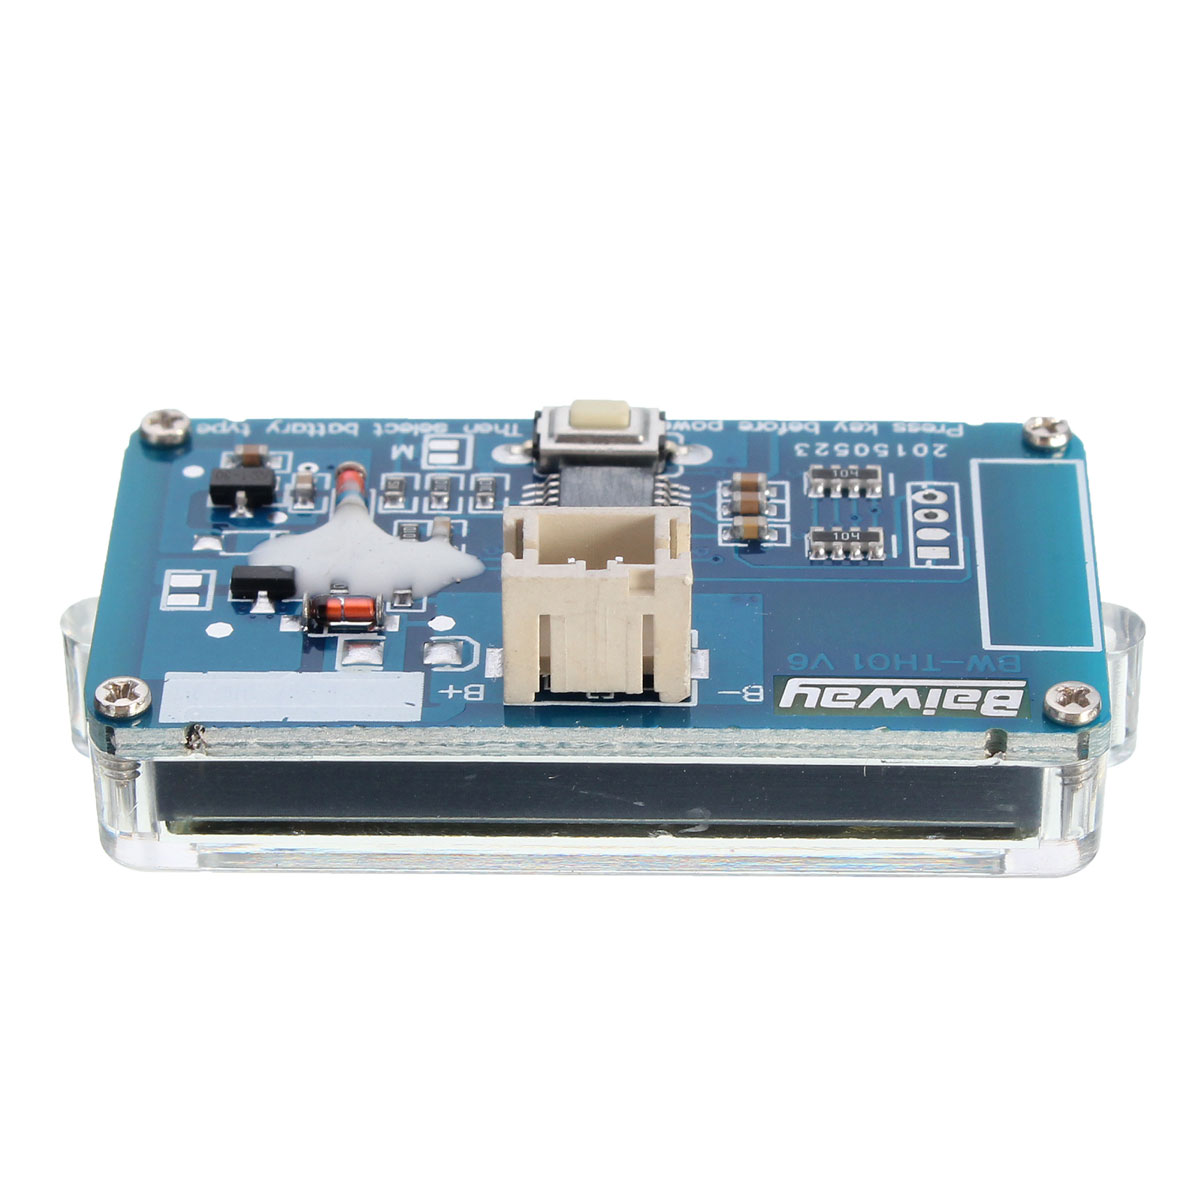 Excellwayreg-Battery-Capacity-Tester-with-LCD-Indicator-for-12V-24V-30V-Lead-acid-Lithium-LiPo-991337-9